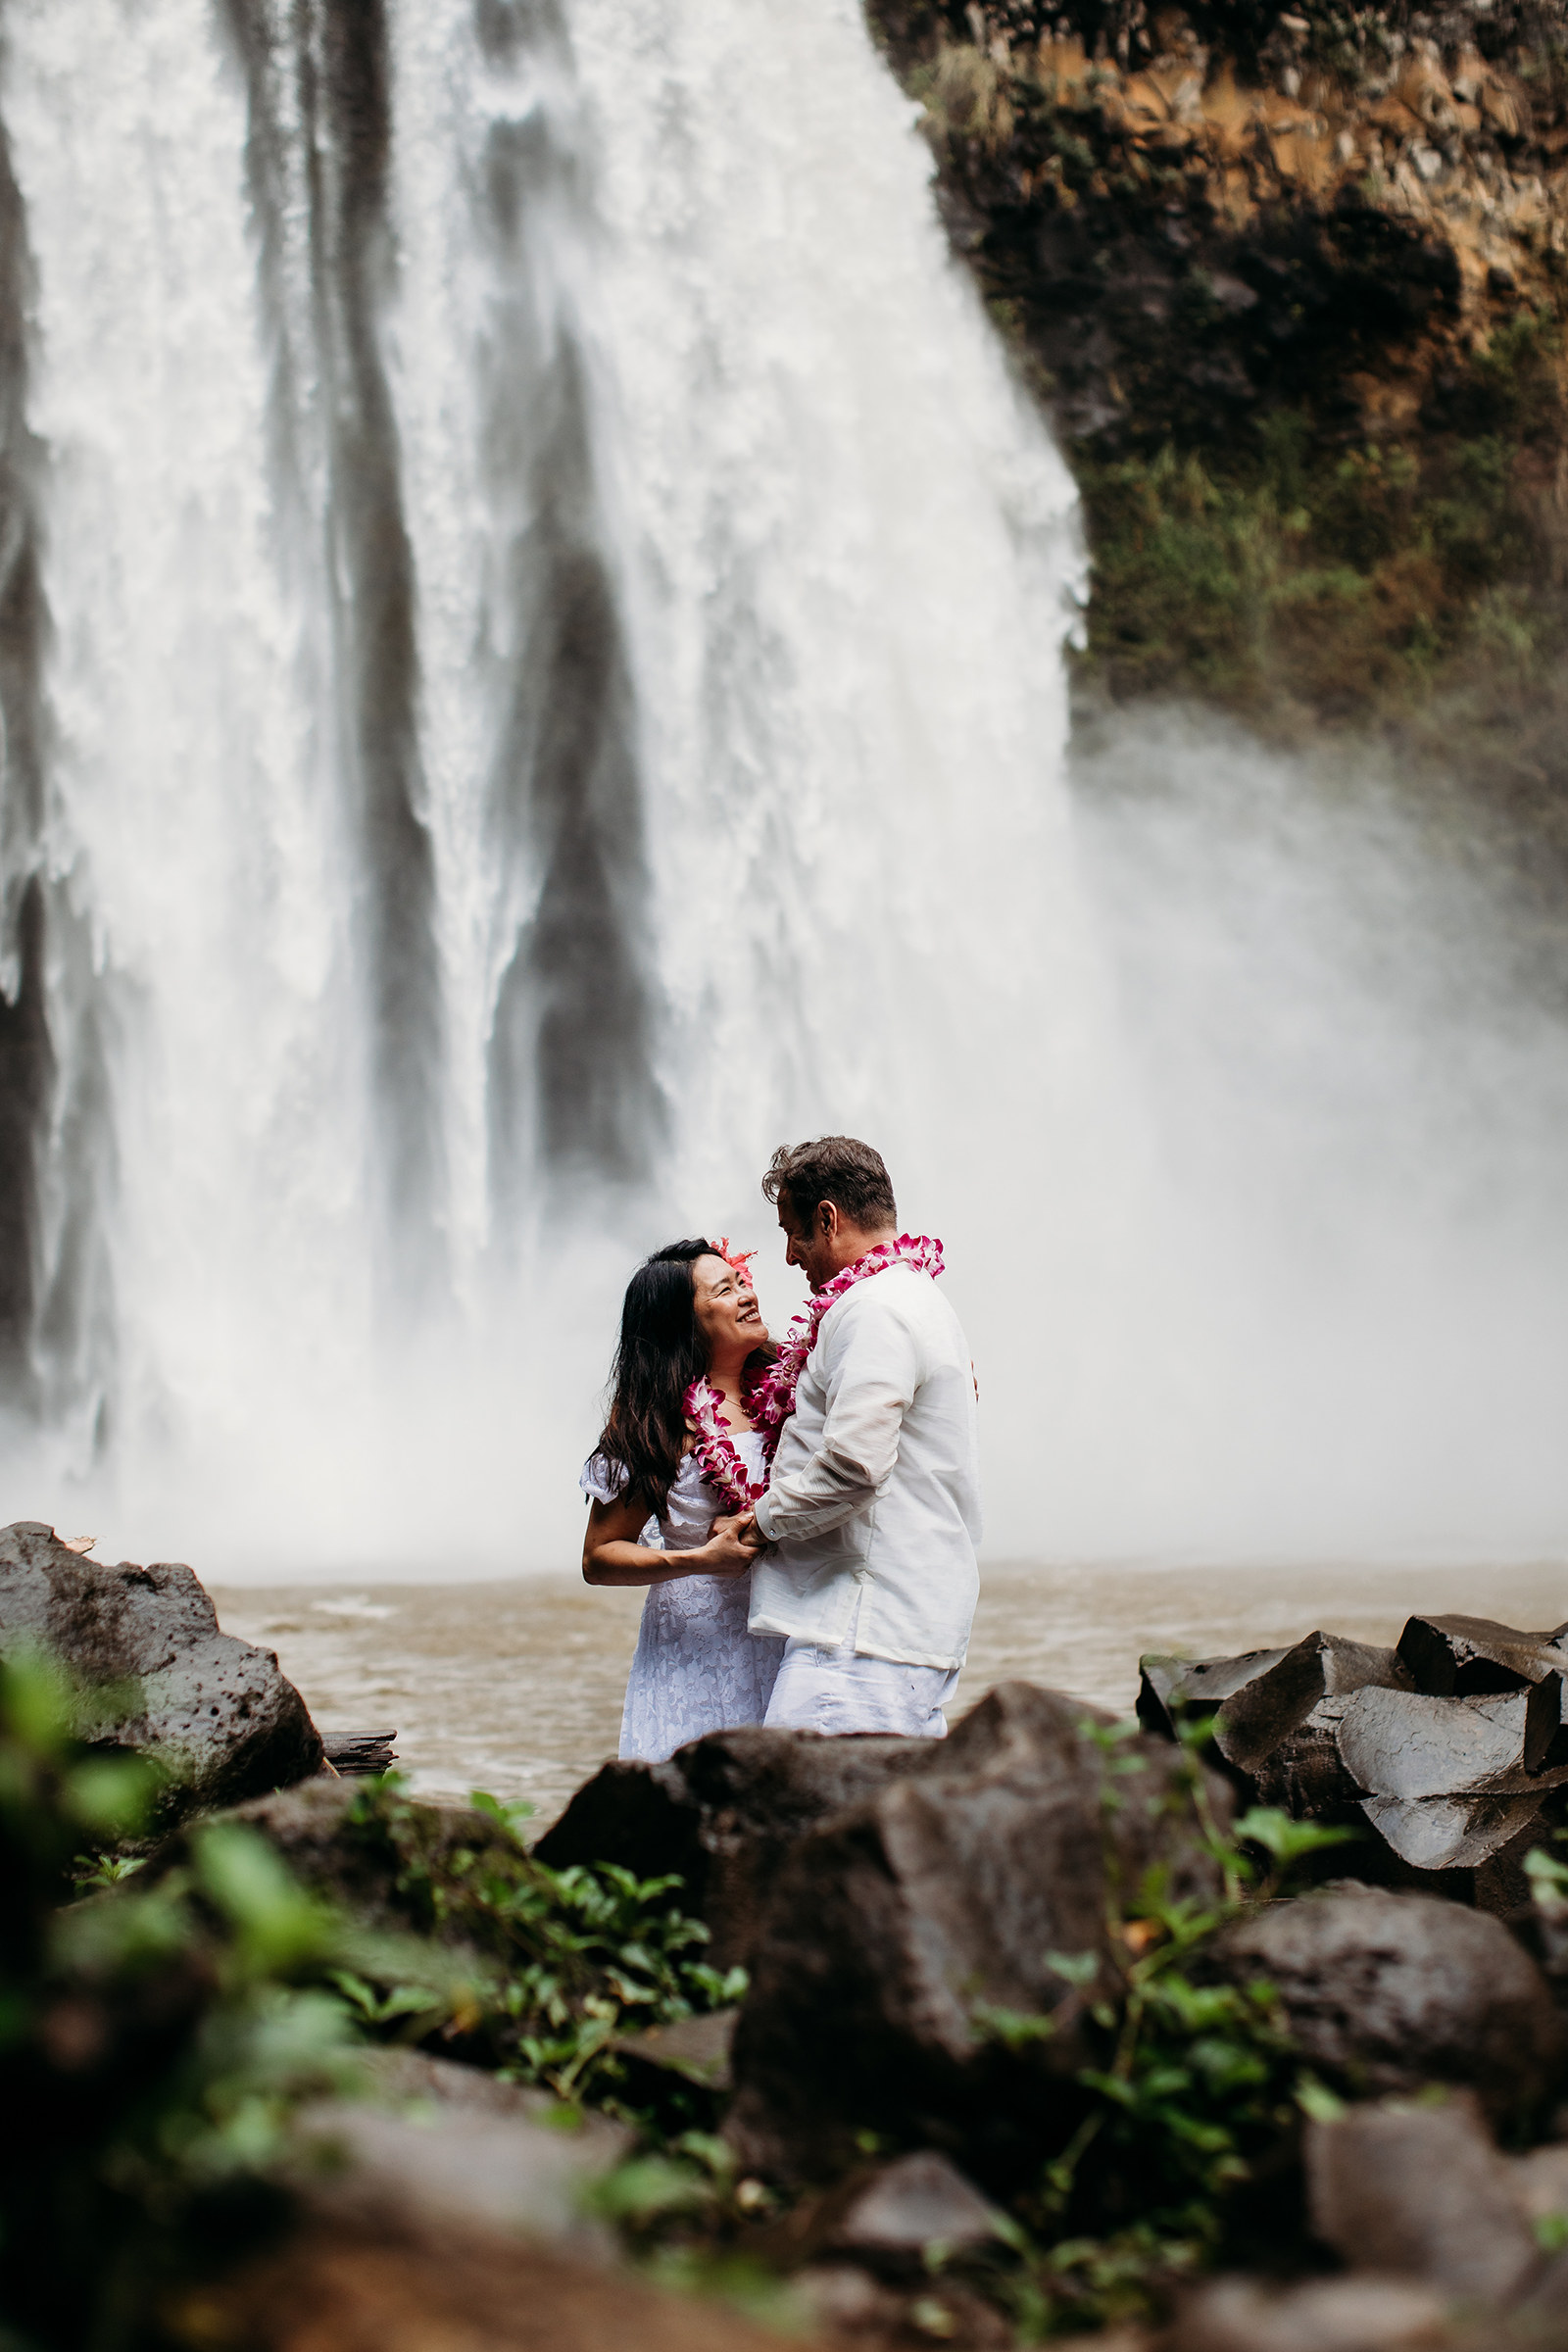 Hawaiian Bride and Groom in front of a Waterfall